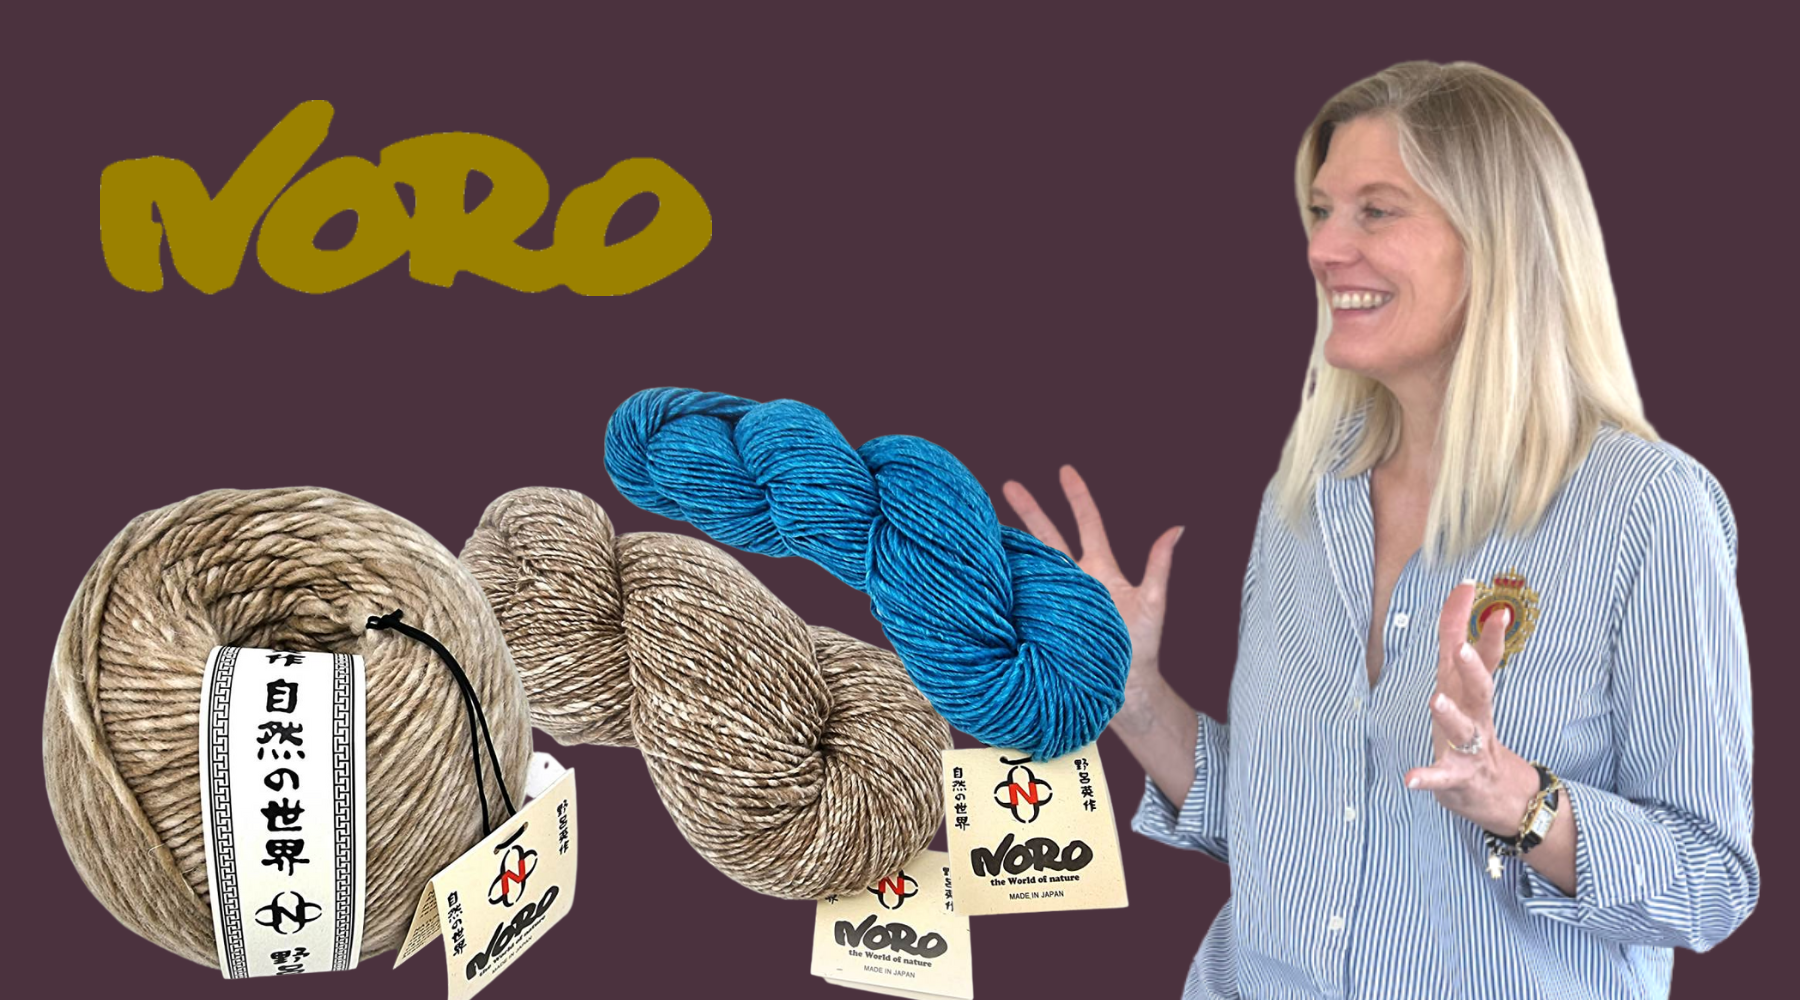 New Noro Yarns - a blending of fibers